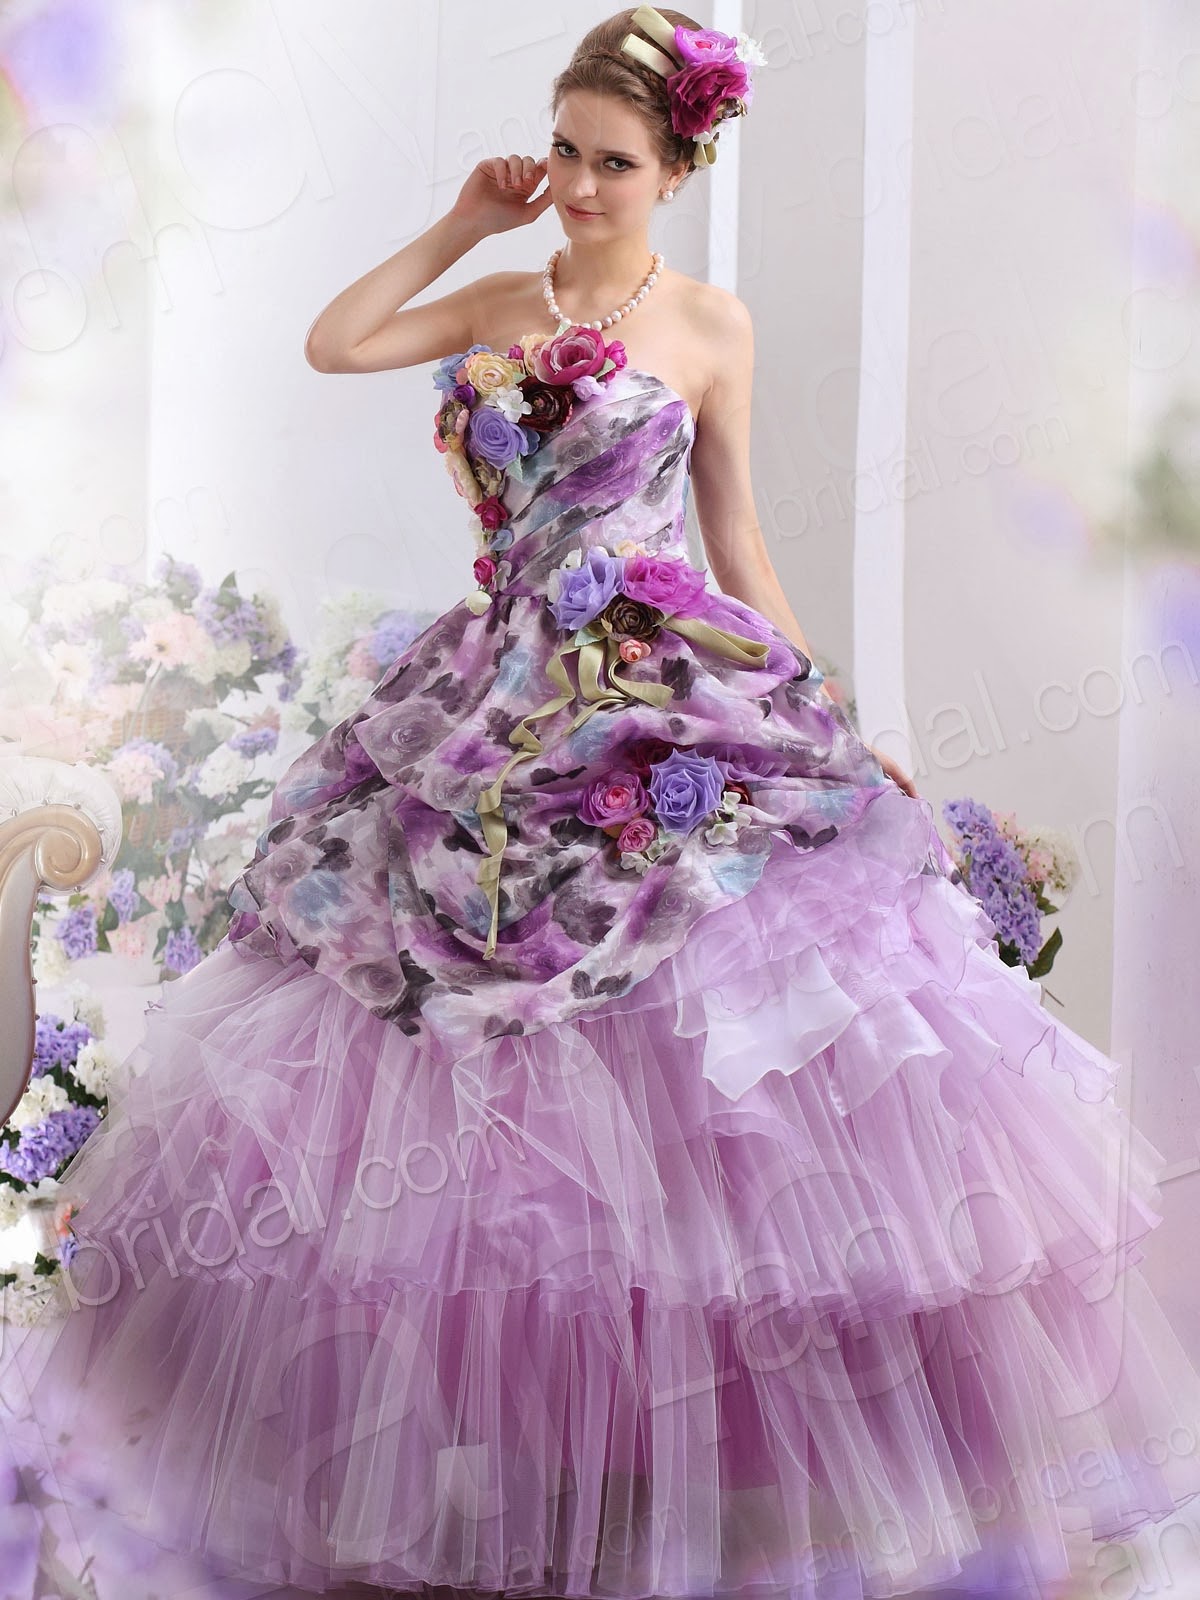 strapless wedding dresses 2014 Ultimate Princess Ballgown Purple Wedding Dress Floral Bodice Ideas